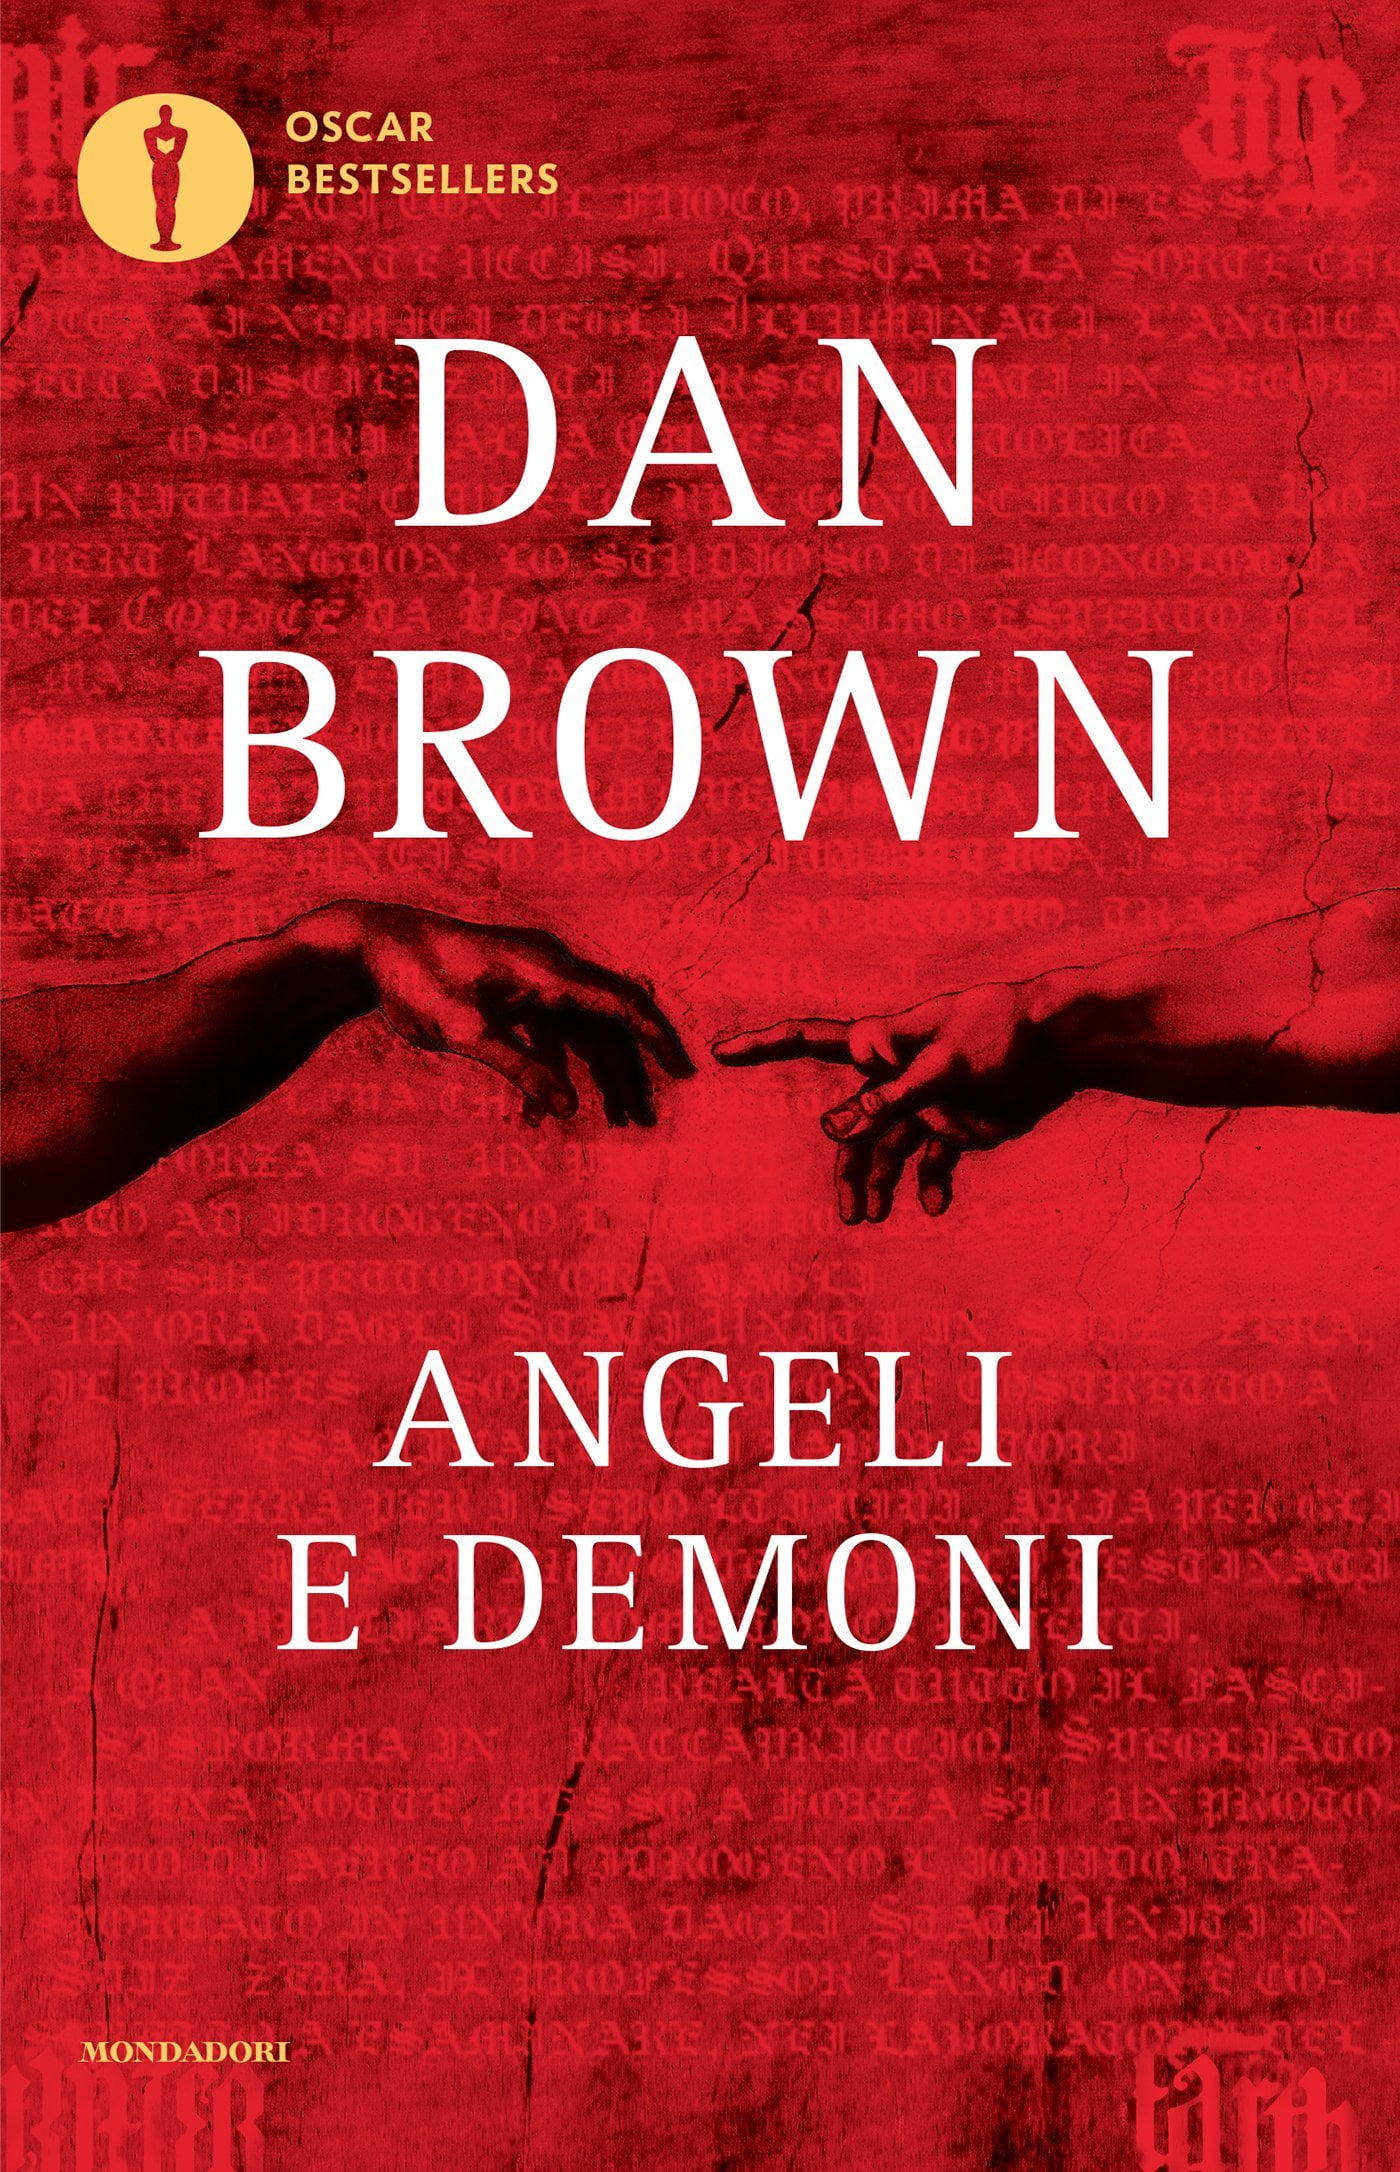 “Angeli e demoni” – Dan Brown